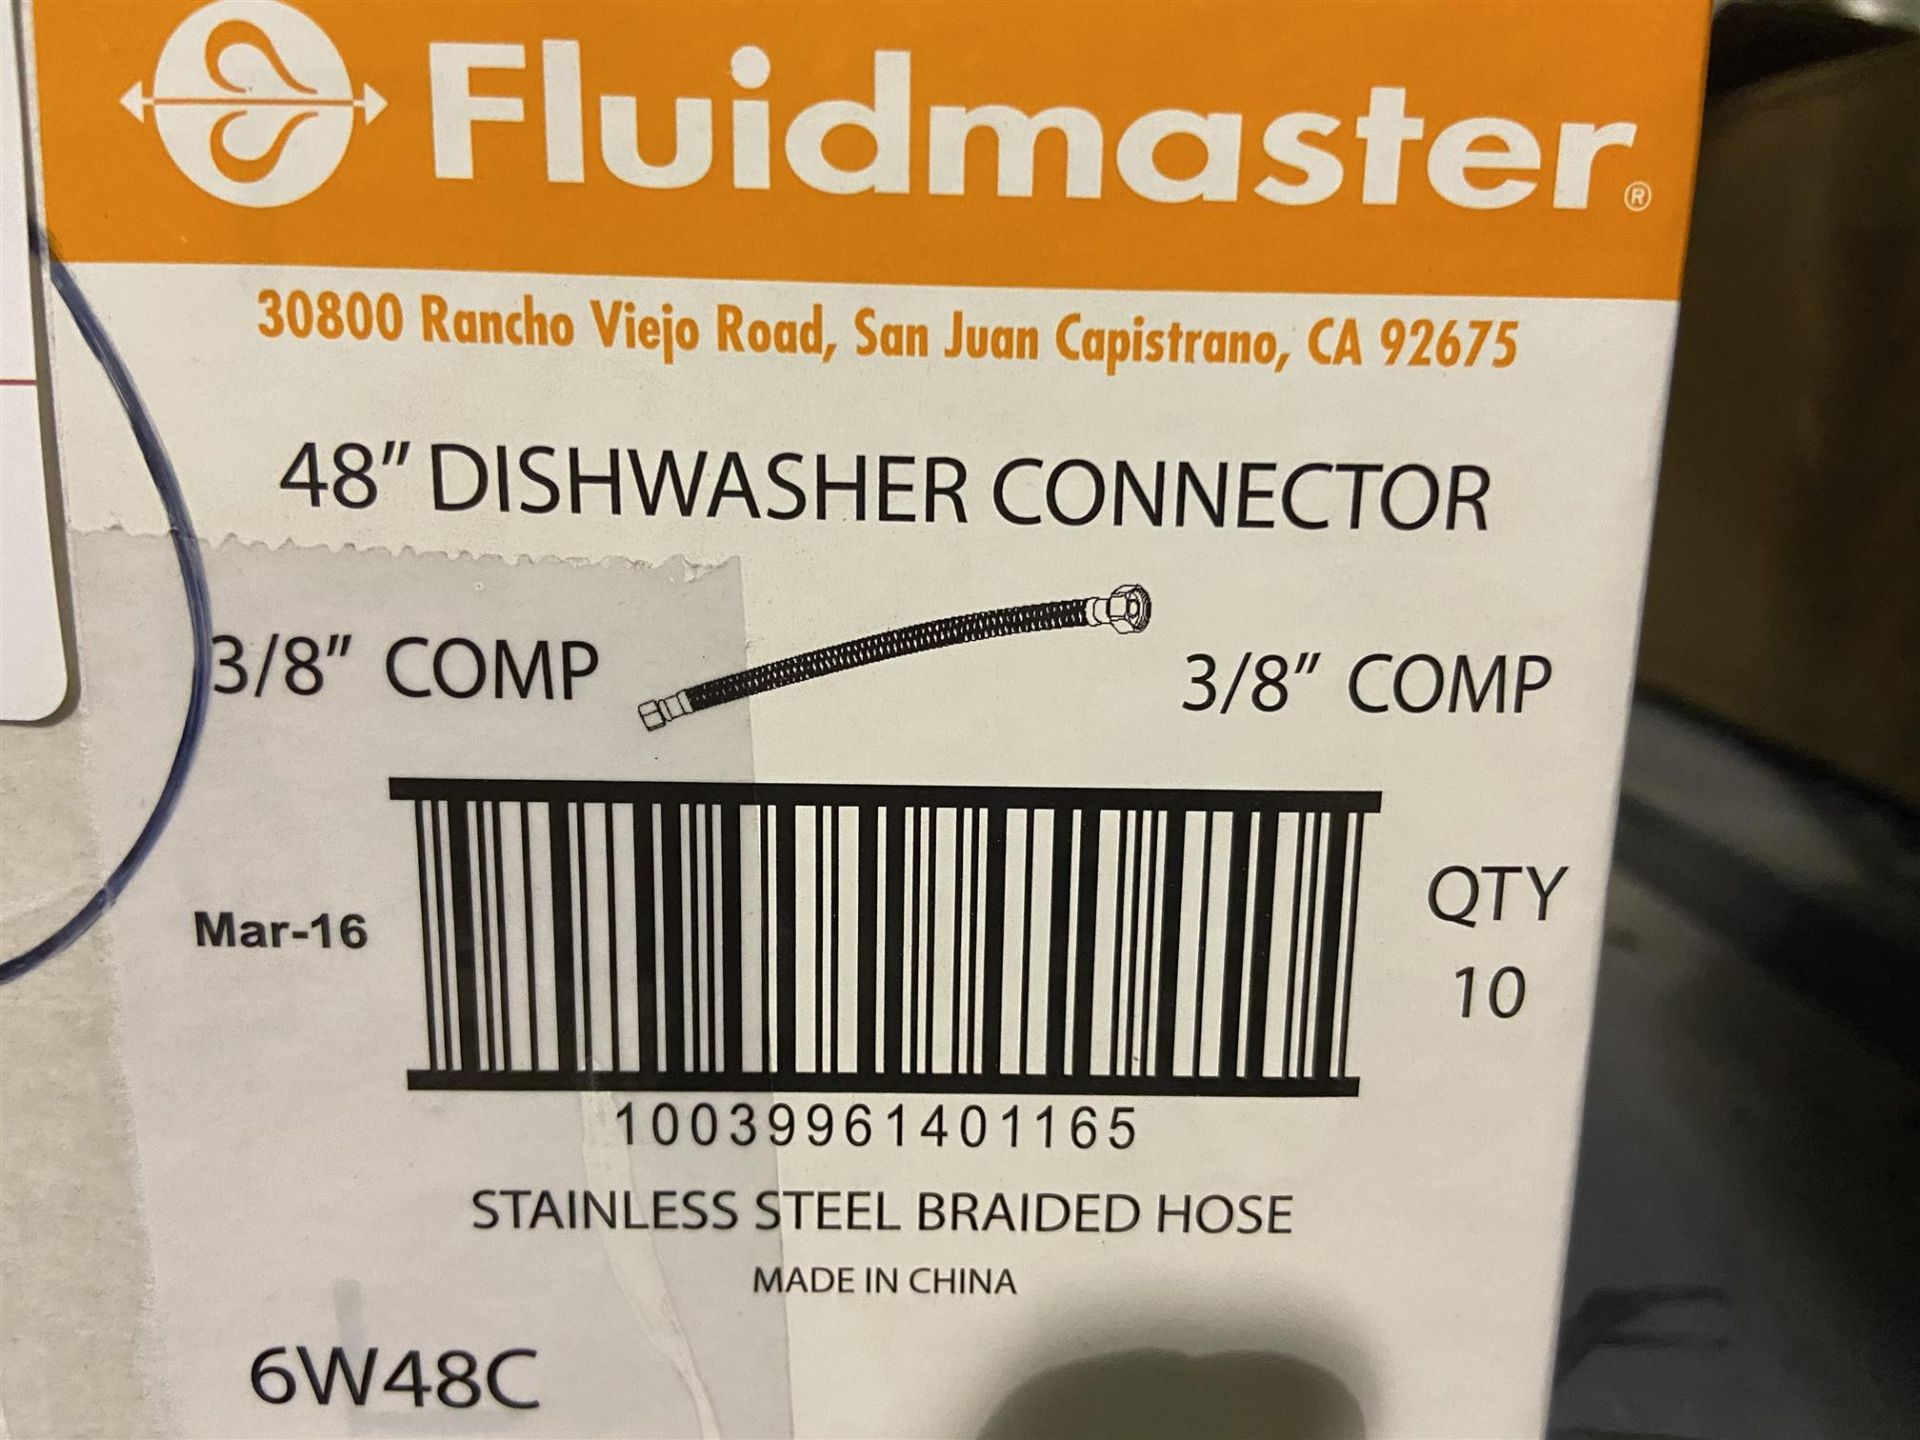 FLUID MASTER - 48" DISHWASHER CONNECTOR 3/8" COMP - 17PCS - Image 2 of 2